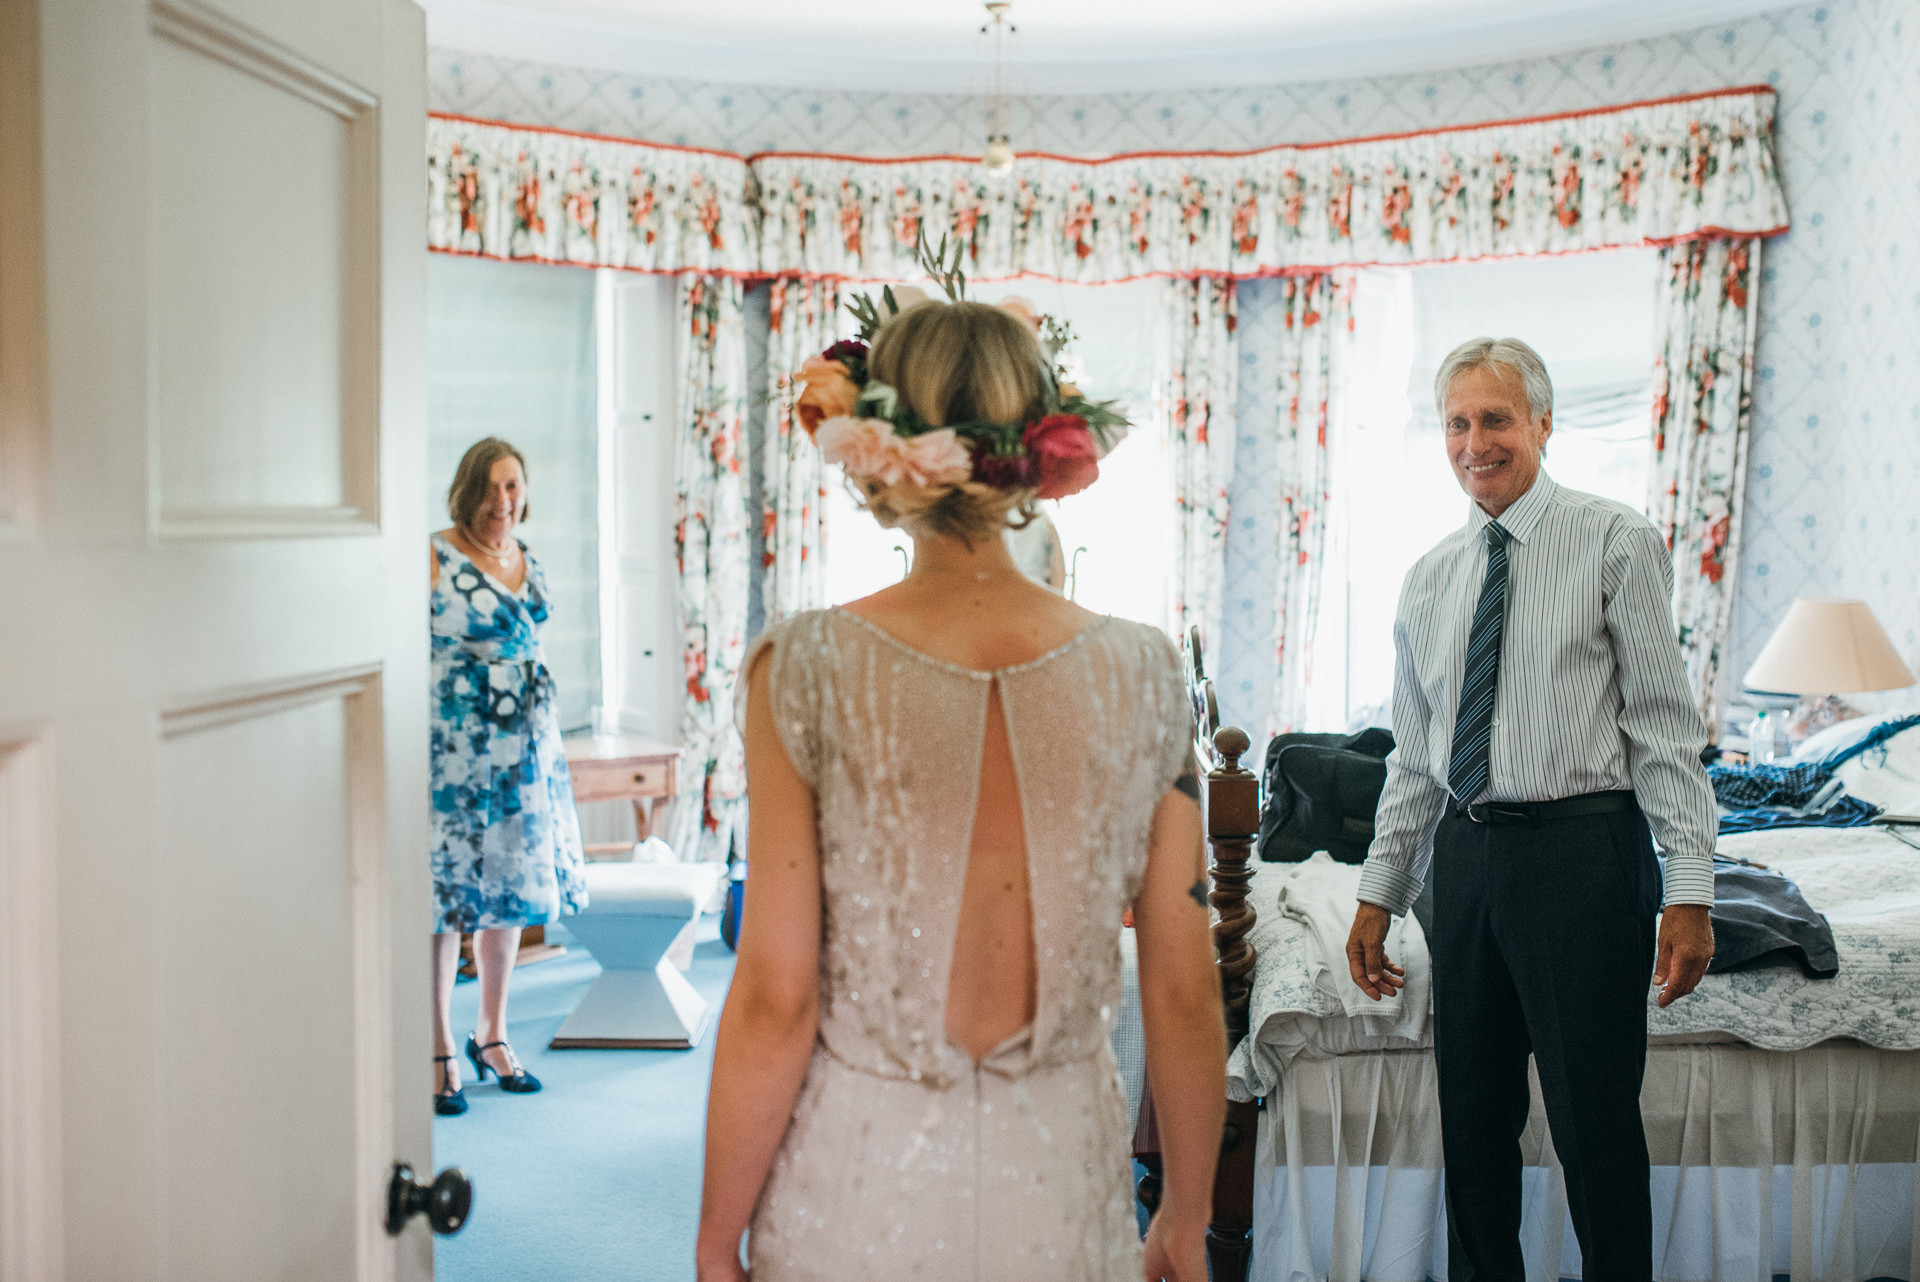 Dad sees bride in dress 